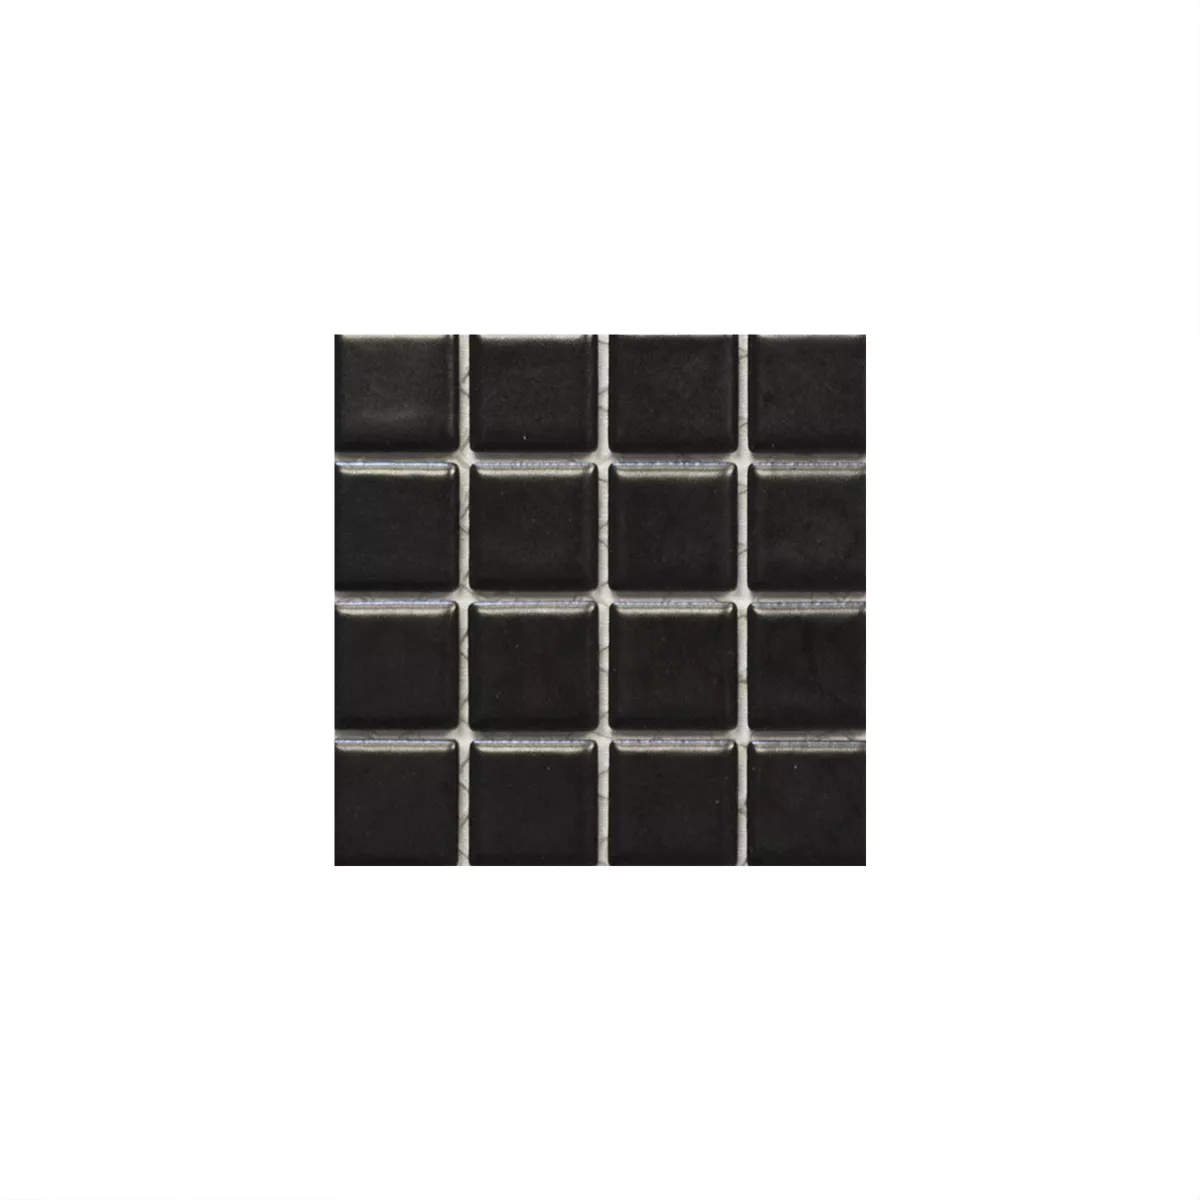 Sample Ceramic Mosaic Tiles Adrian Black Mat Square 23